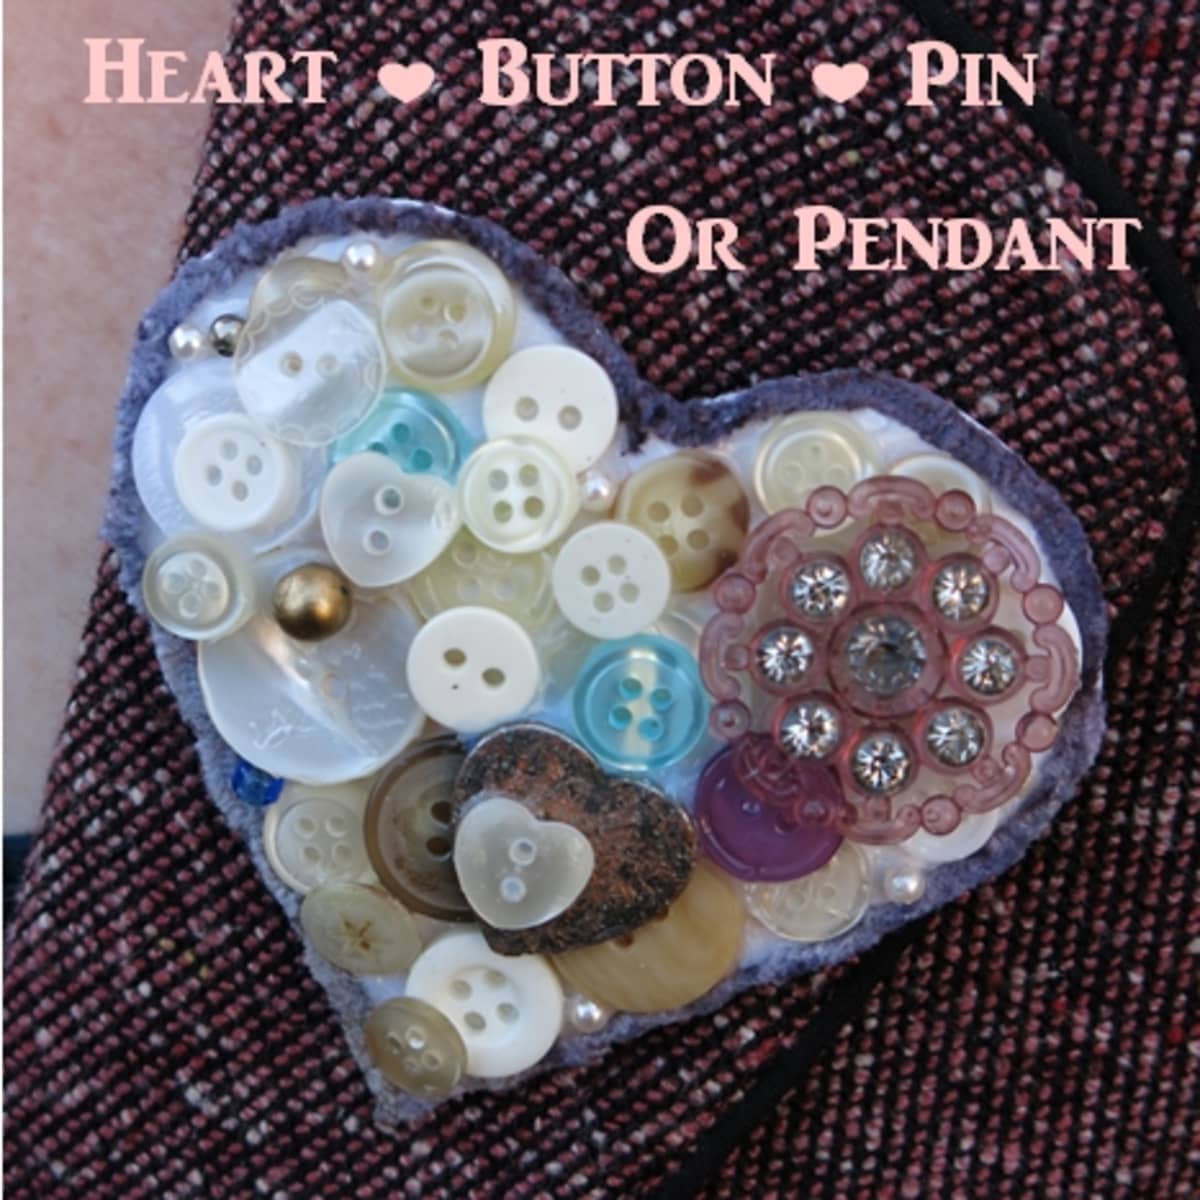 Buttons, ribbons, shawl pins, brooches